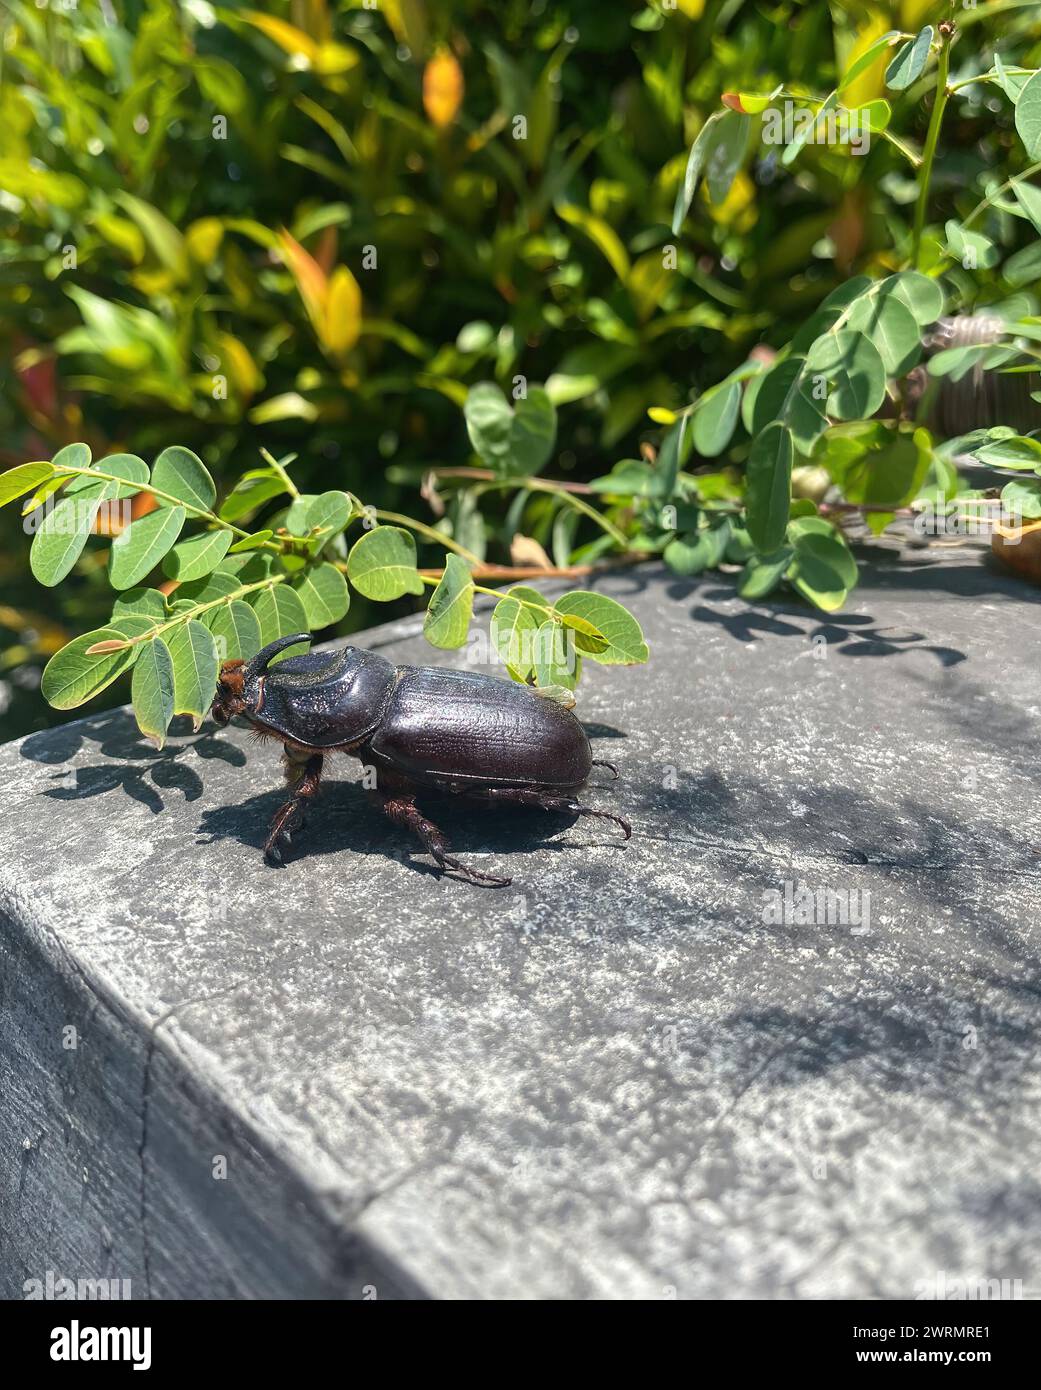 Rhinoceros beetle on post with vegetation in Bali Stock Photo